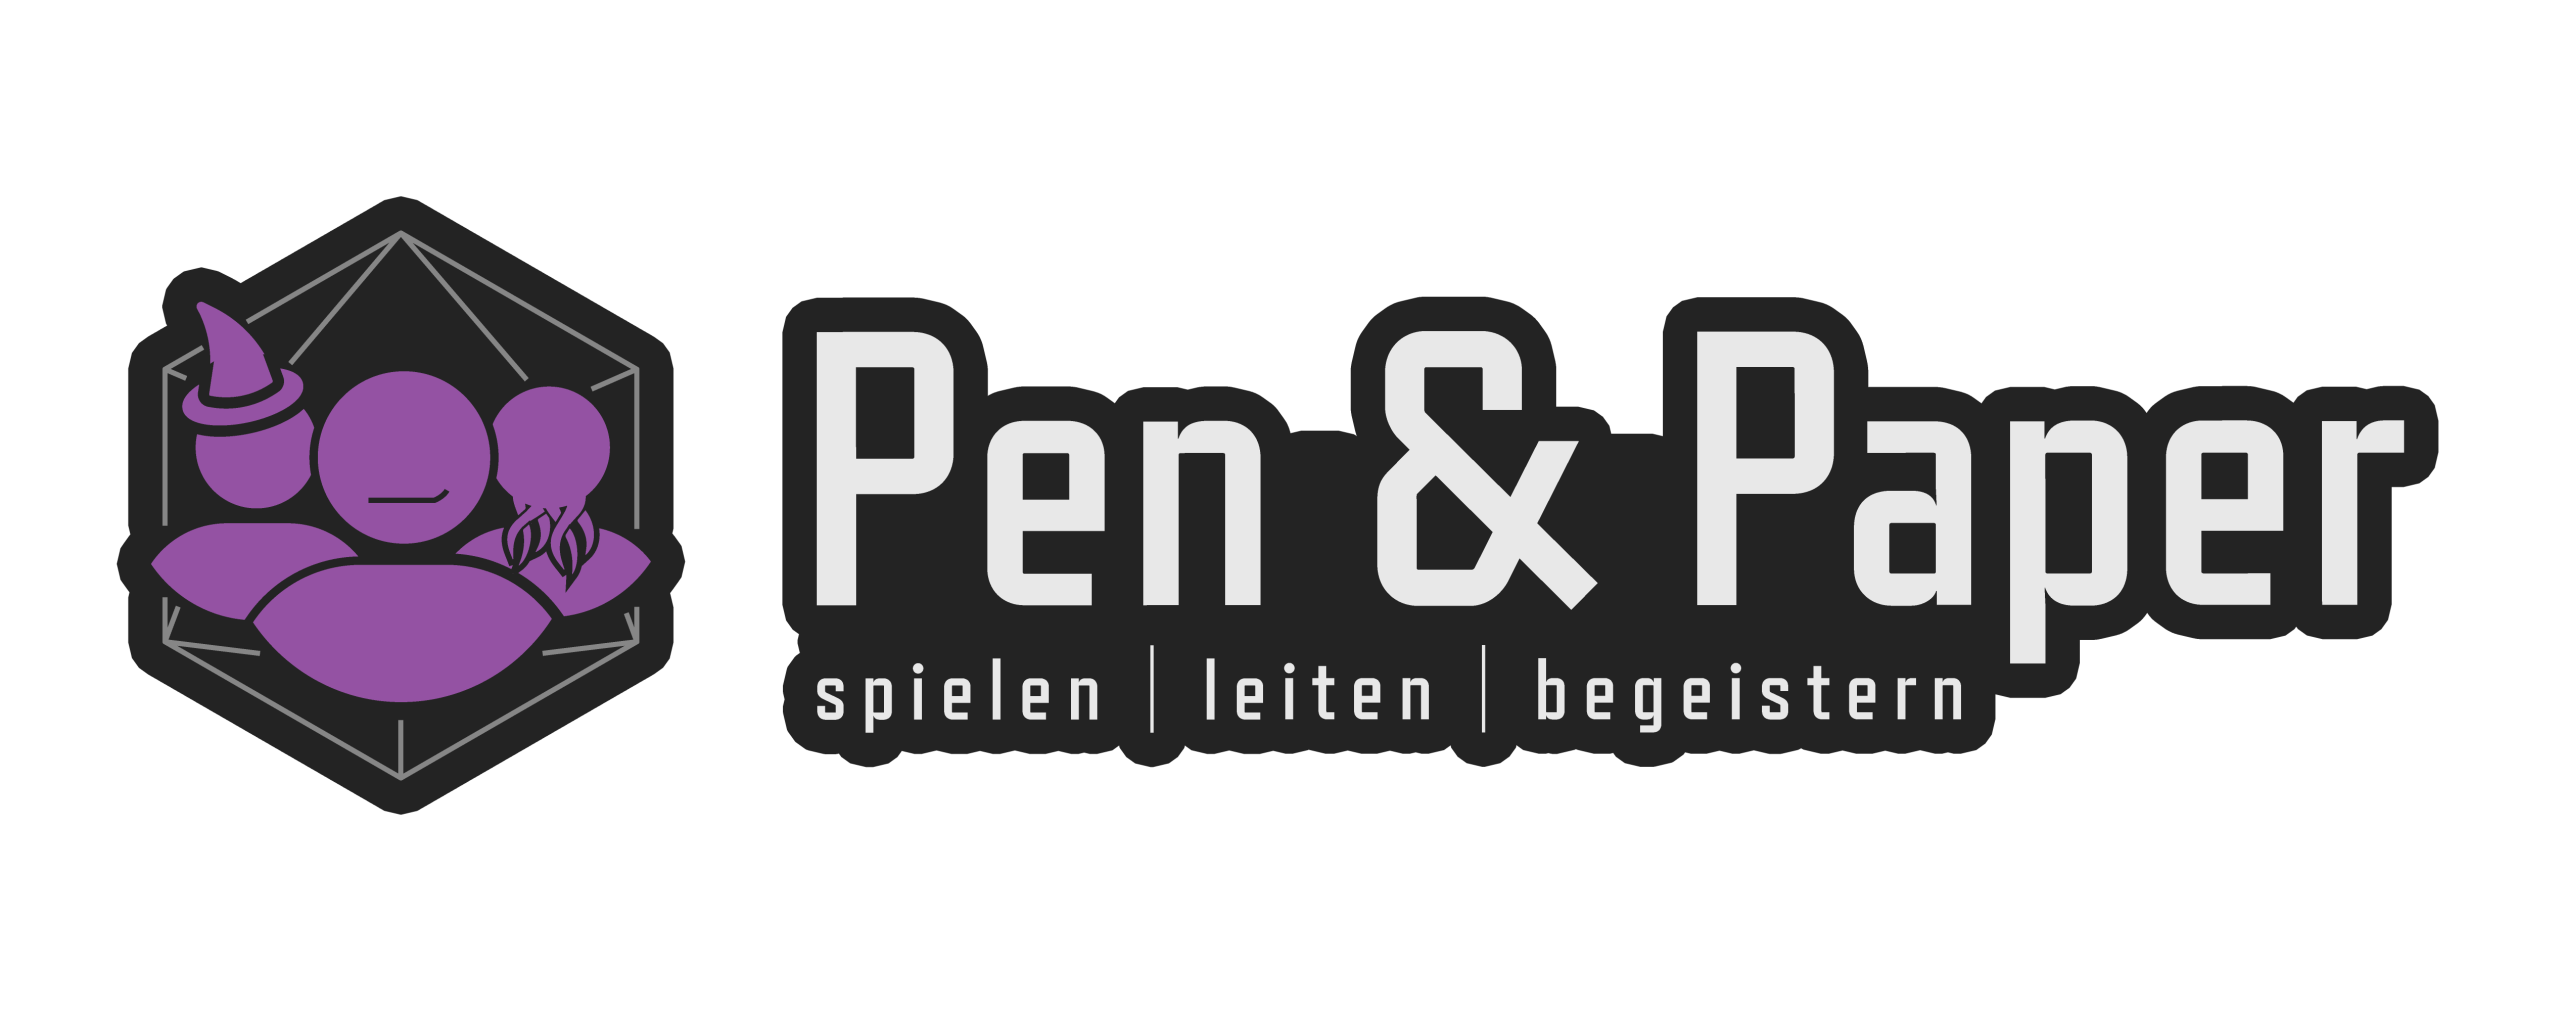 Pen & Paper